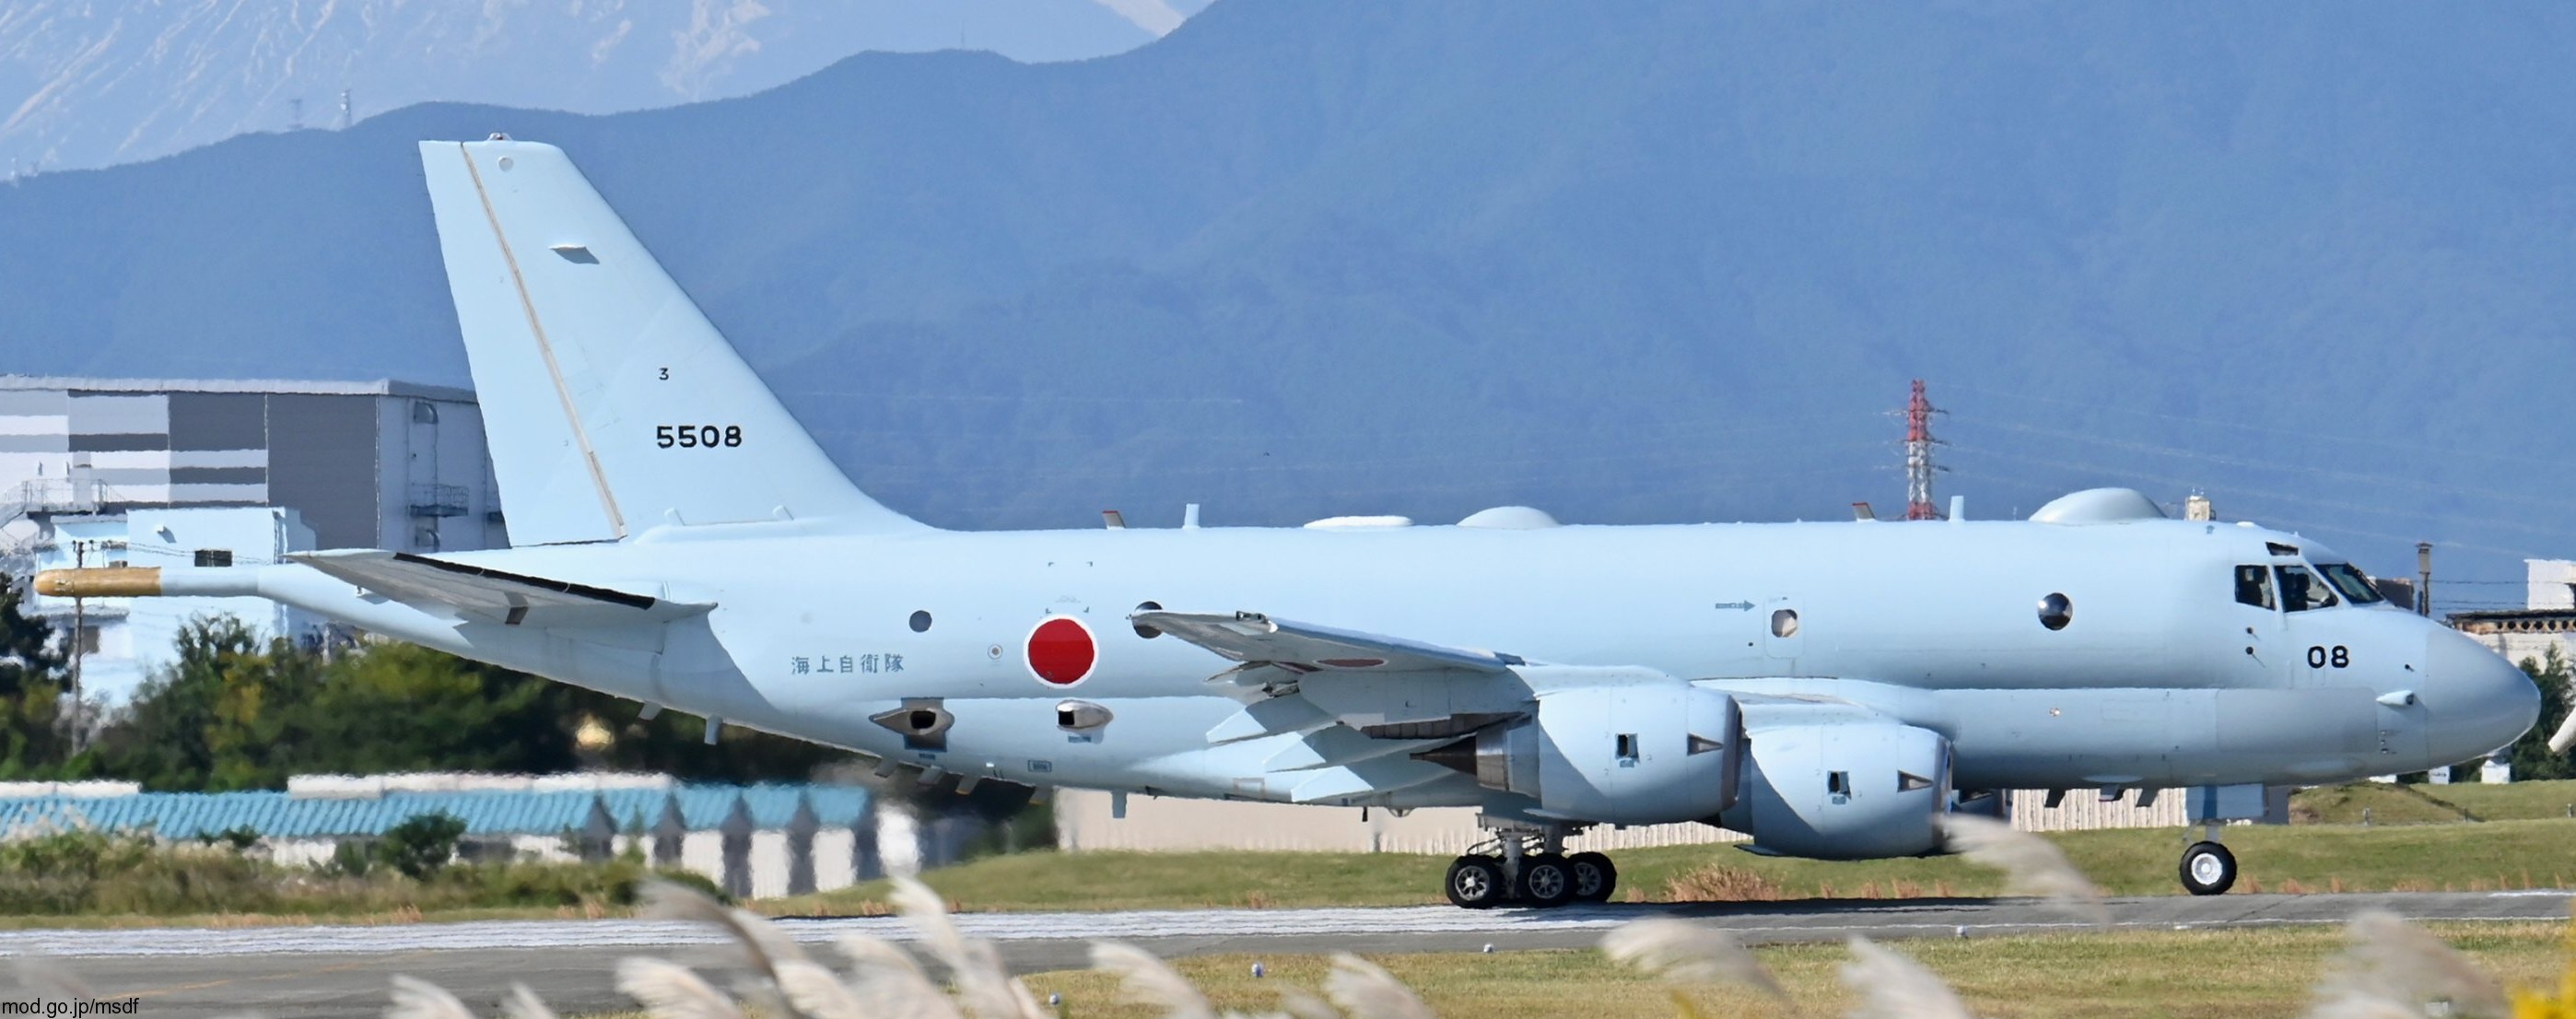 kawasaki p-1 patrol aircraft mpa japan maritime self defense force jmsdf 5508 04